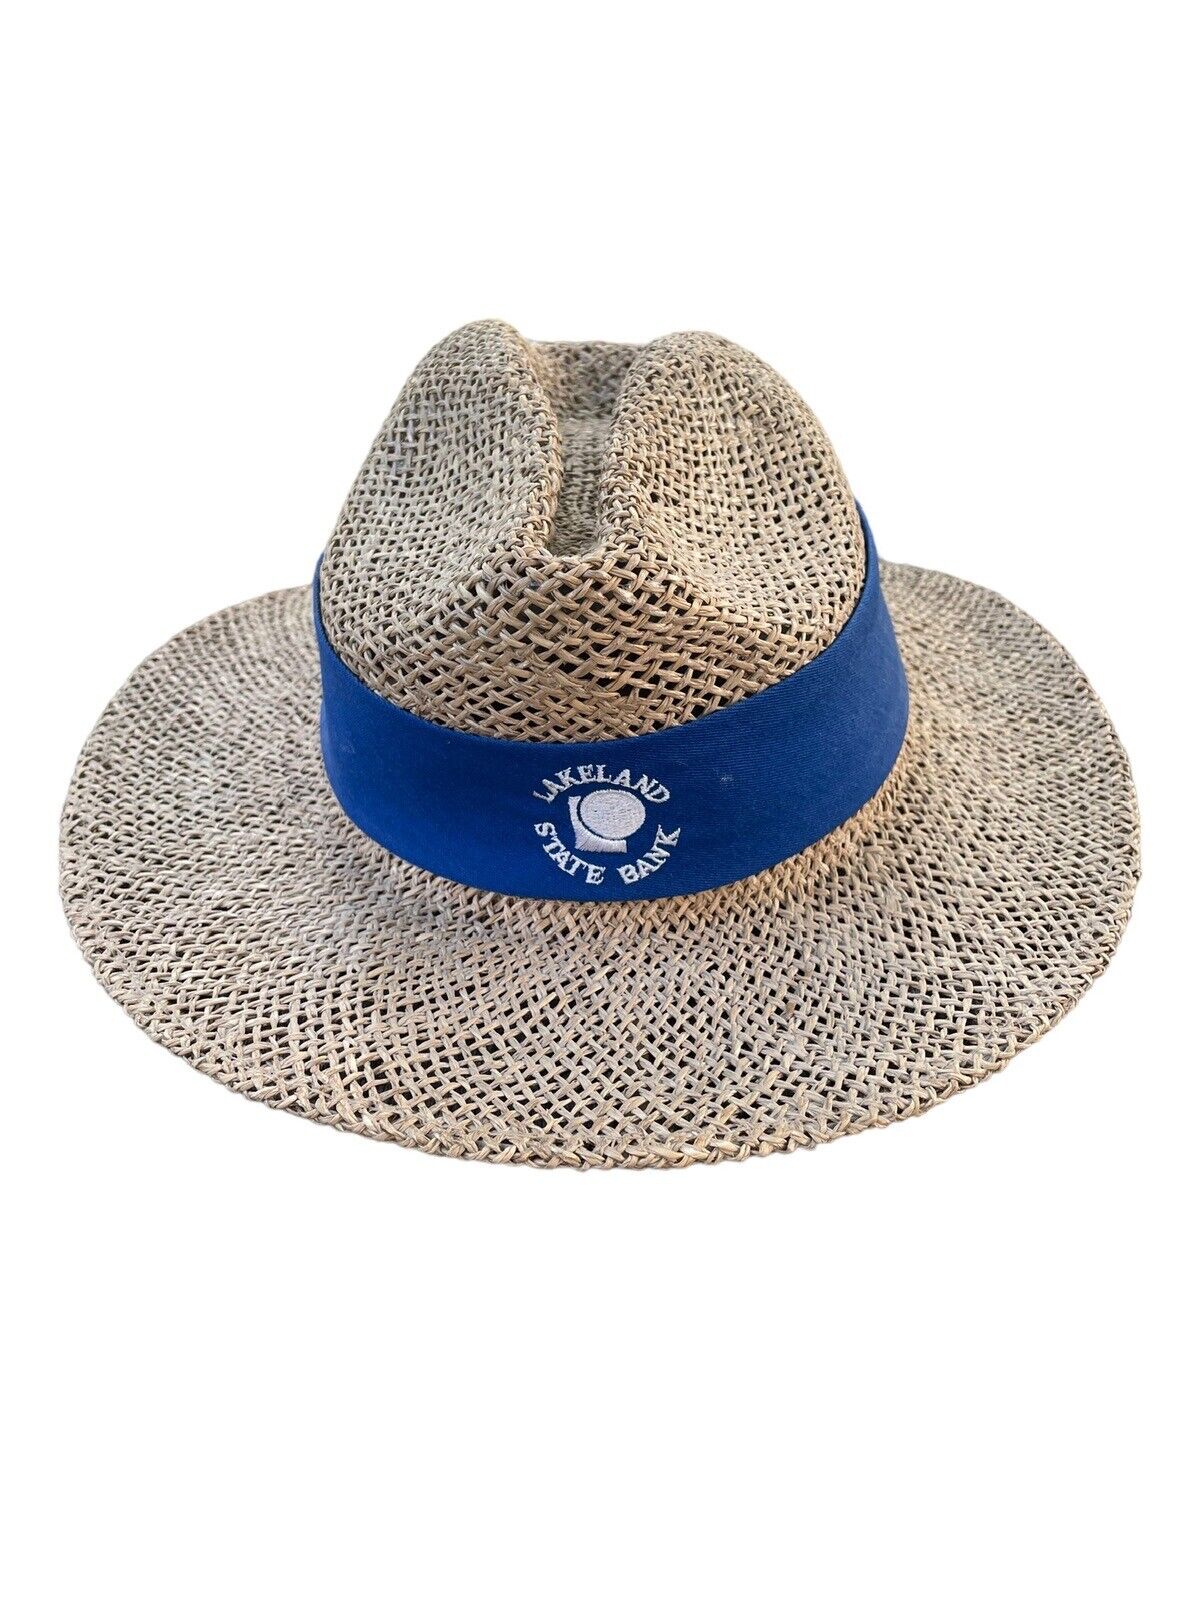 Lakeland State Bank Men\'s Straw Panama Fedora Hat With Blue Band OSFA vintage